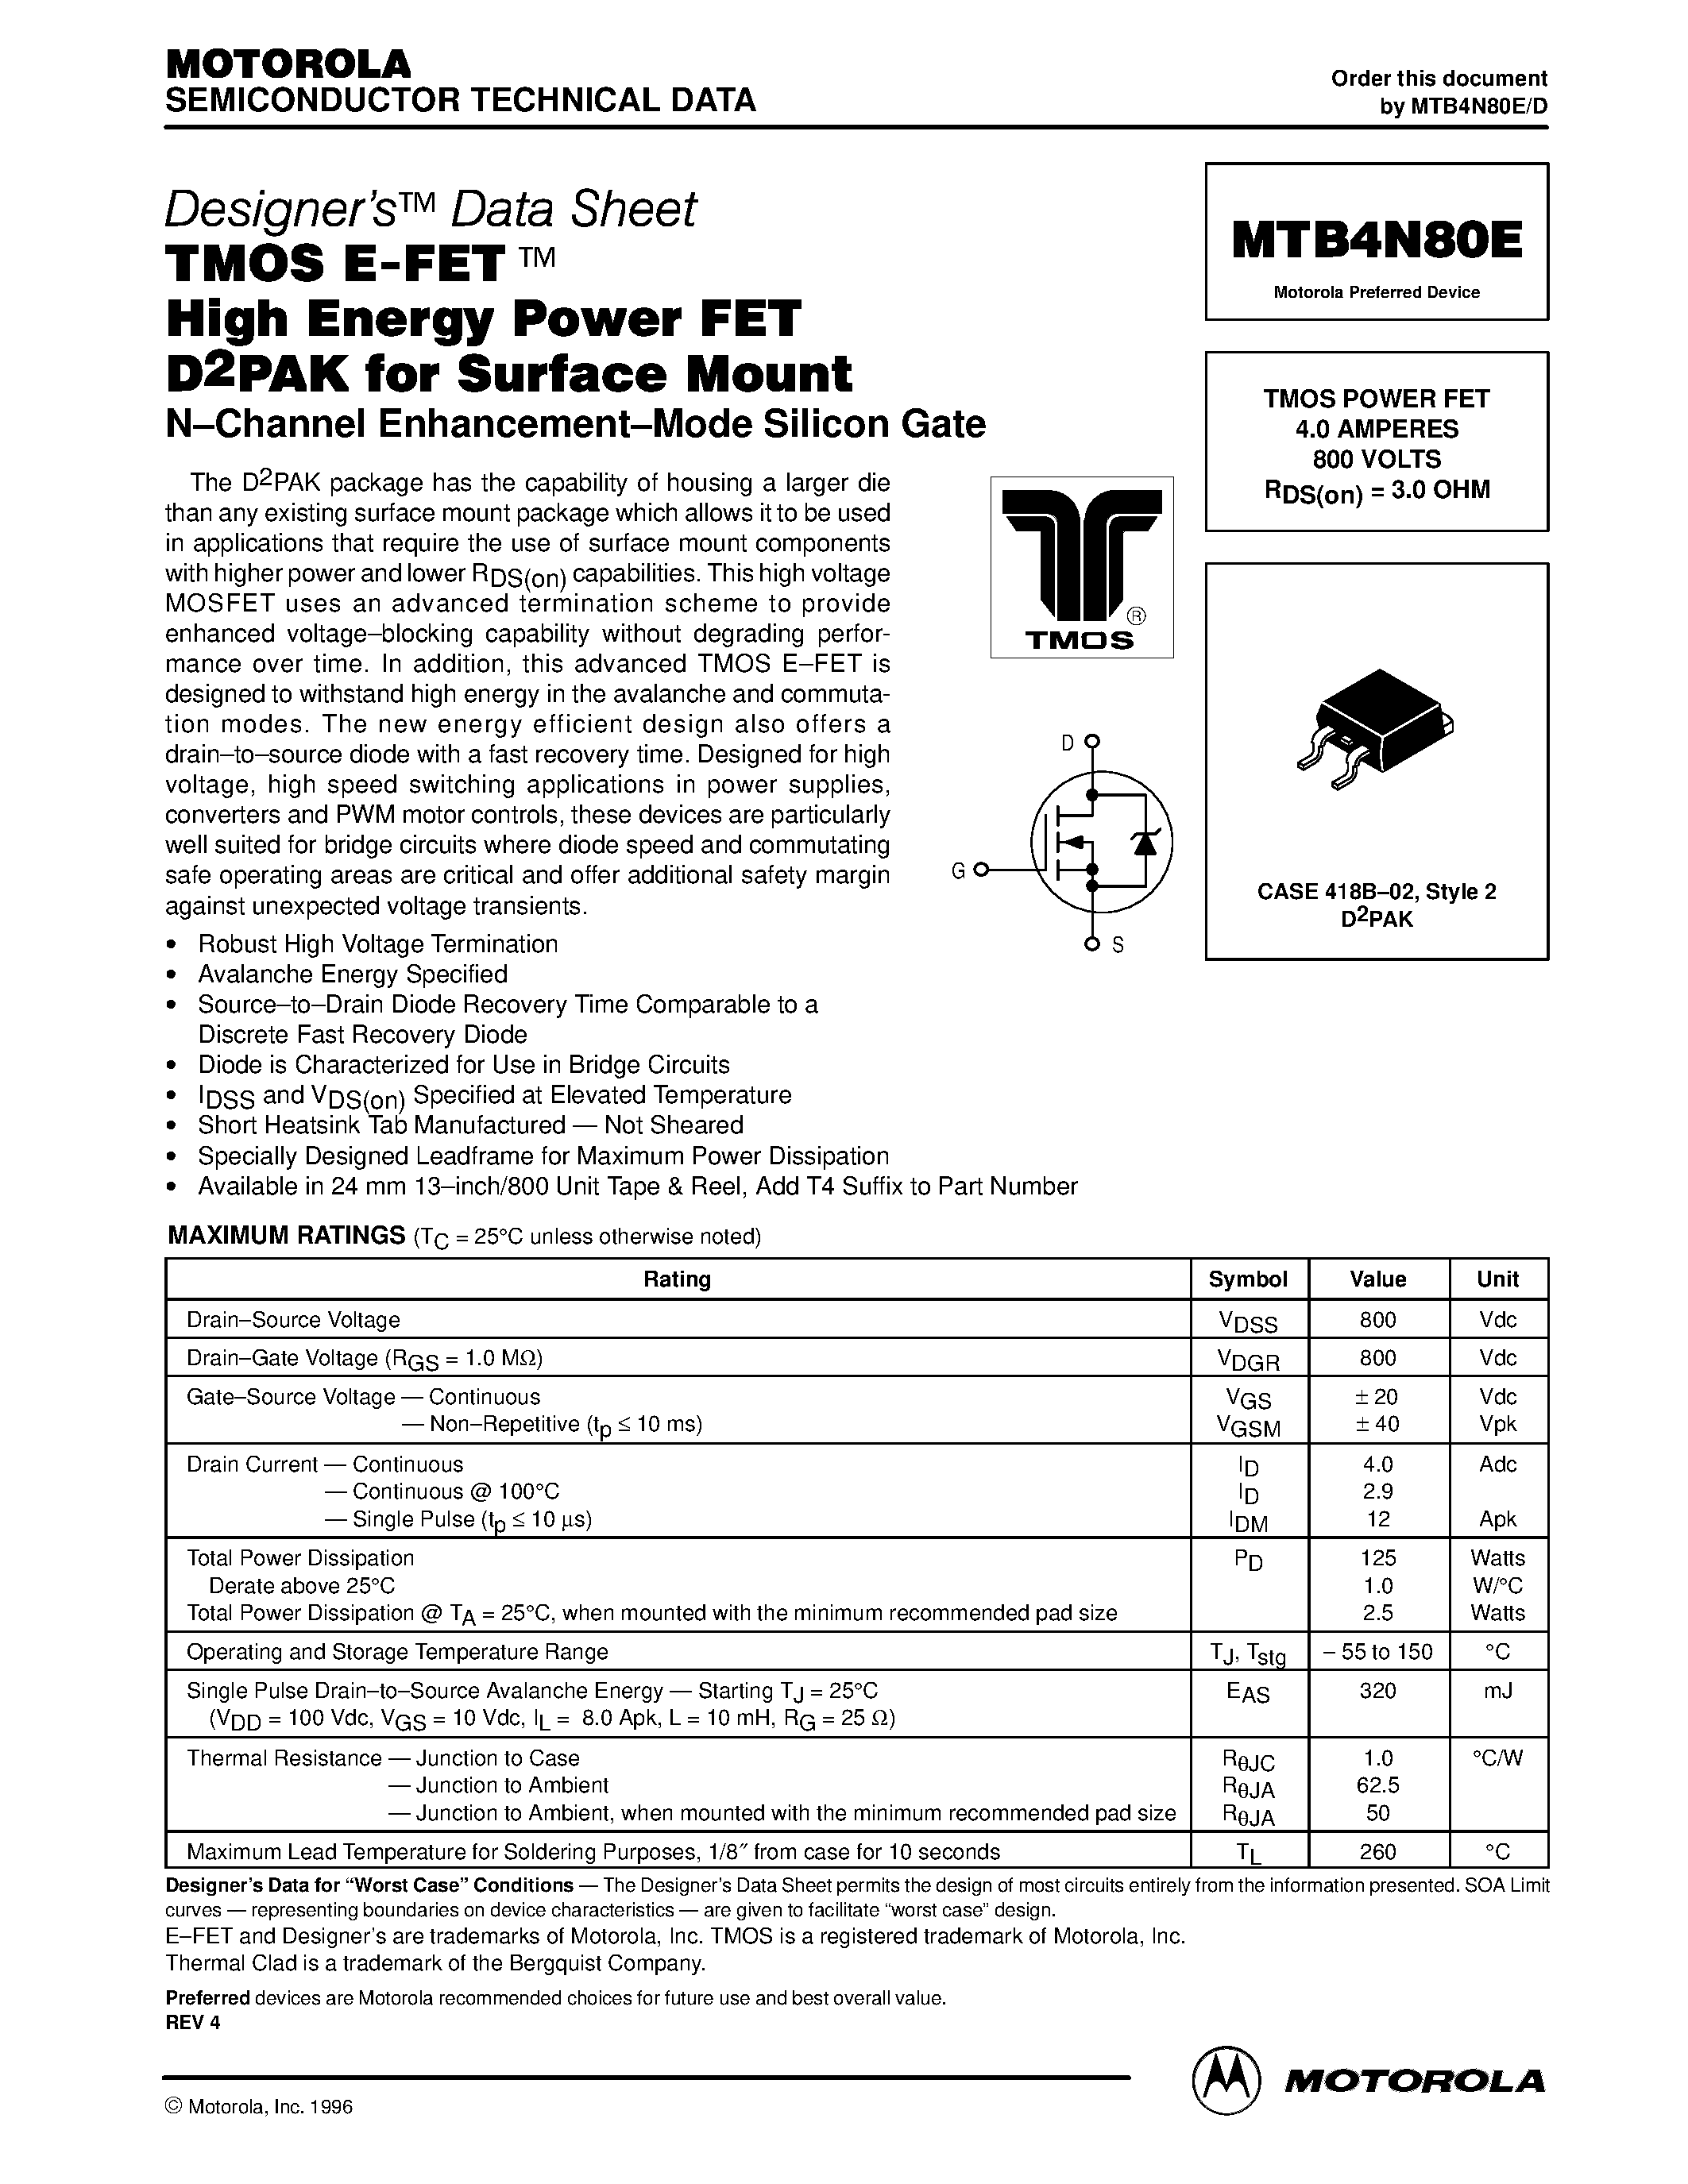 Datasheet MTB4N80E - TMOS POWER FET 4.0 AMPERES 800 VOLTS page 1